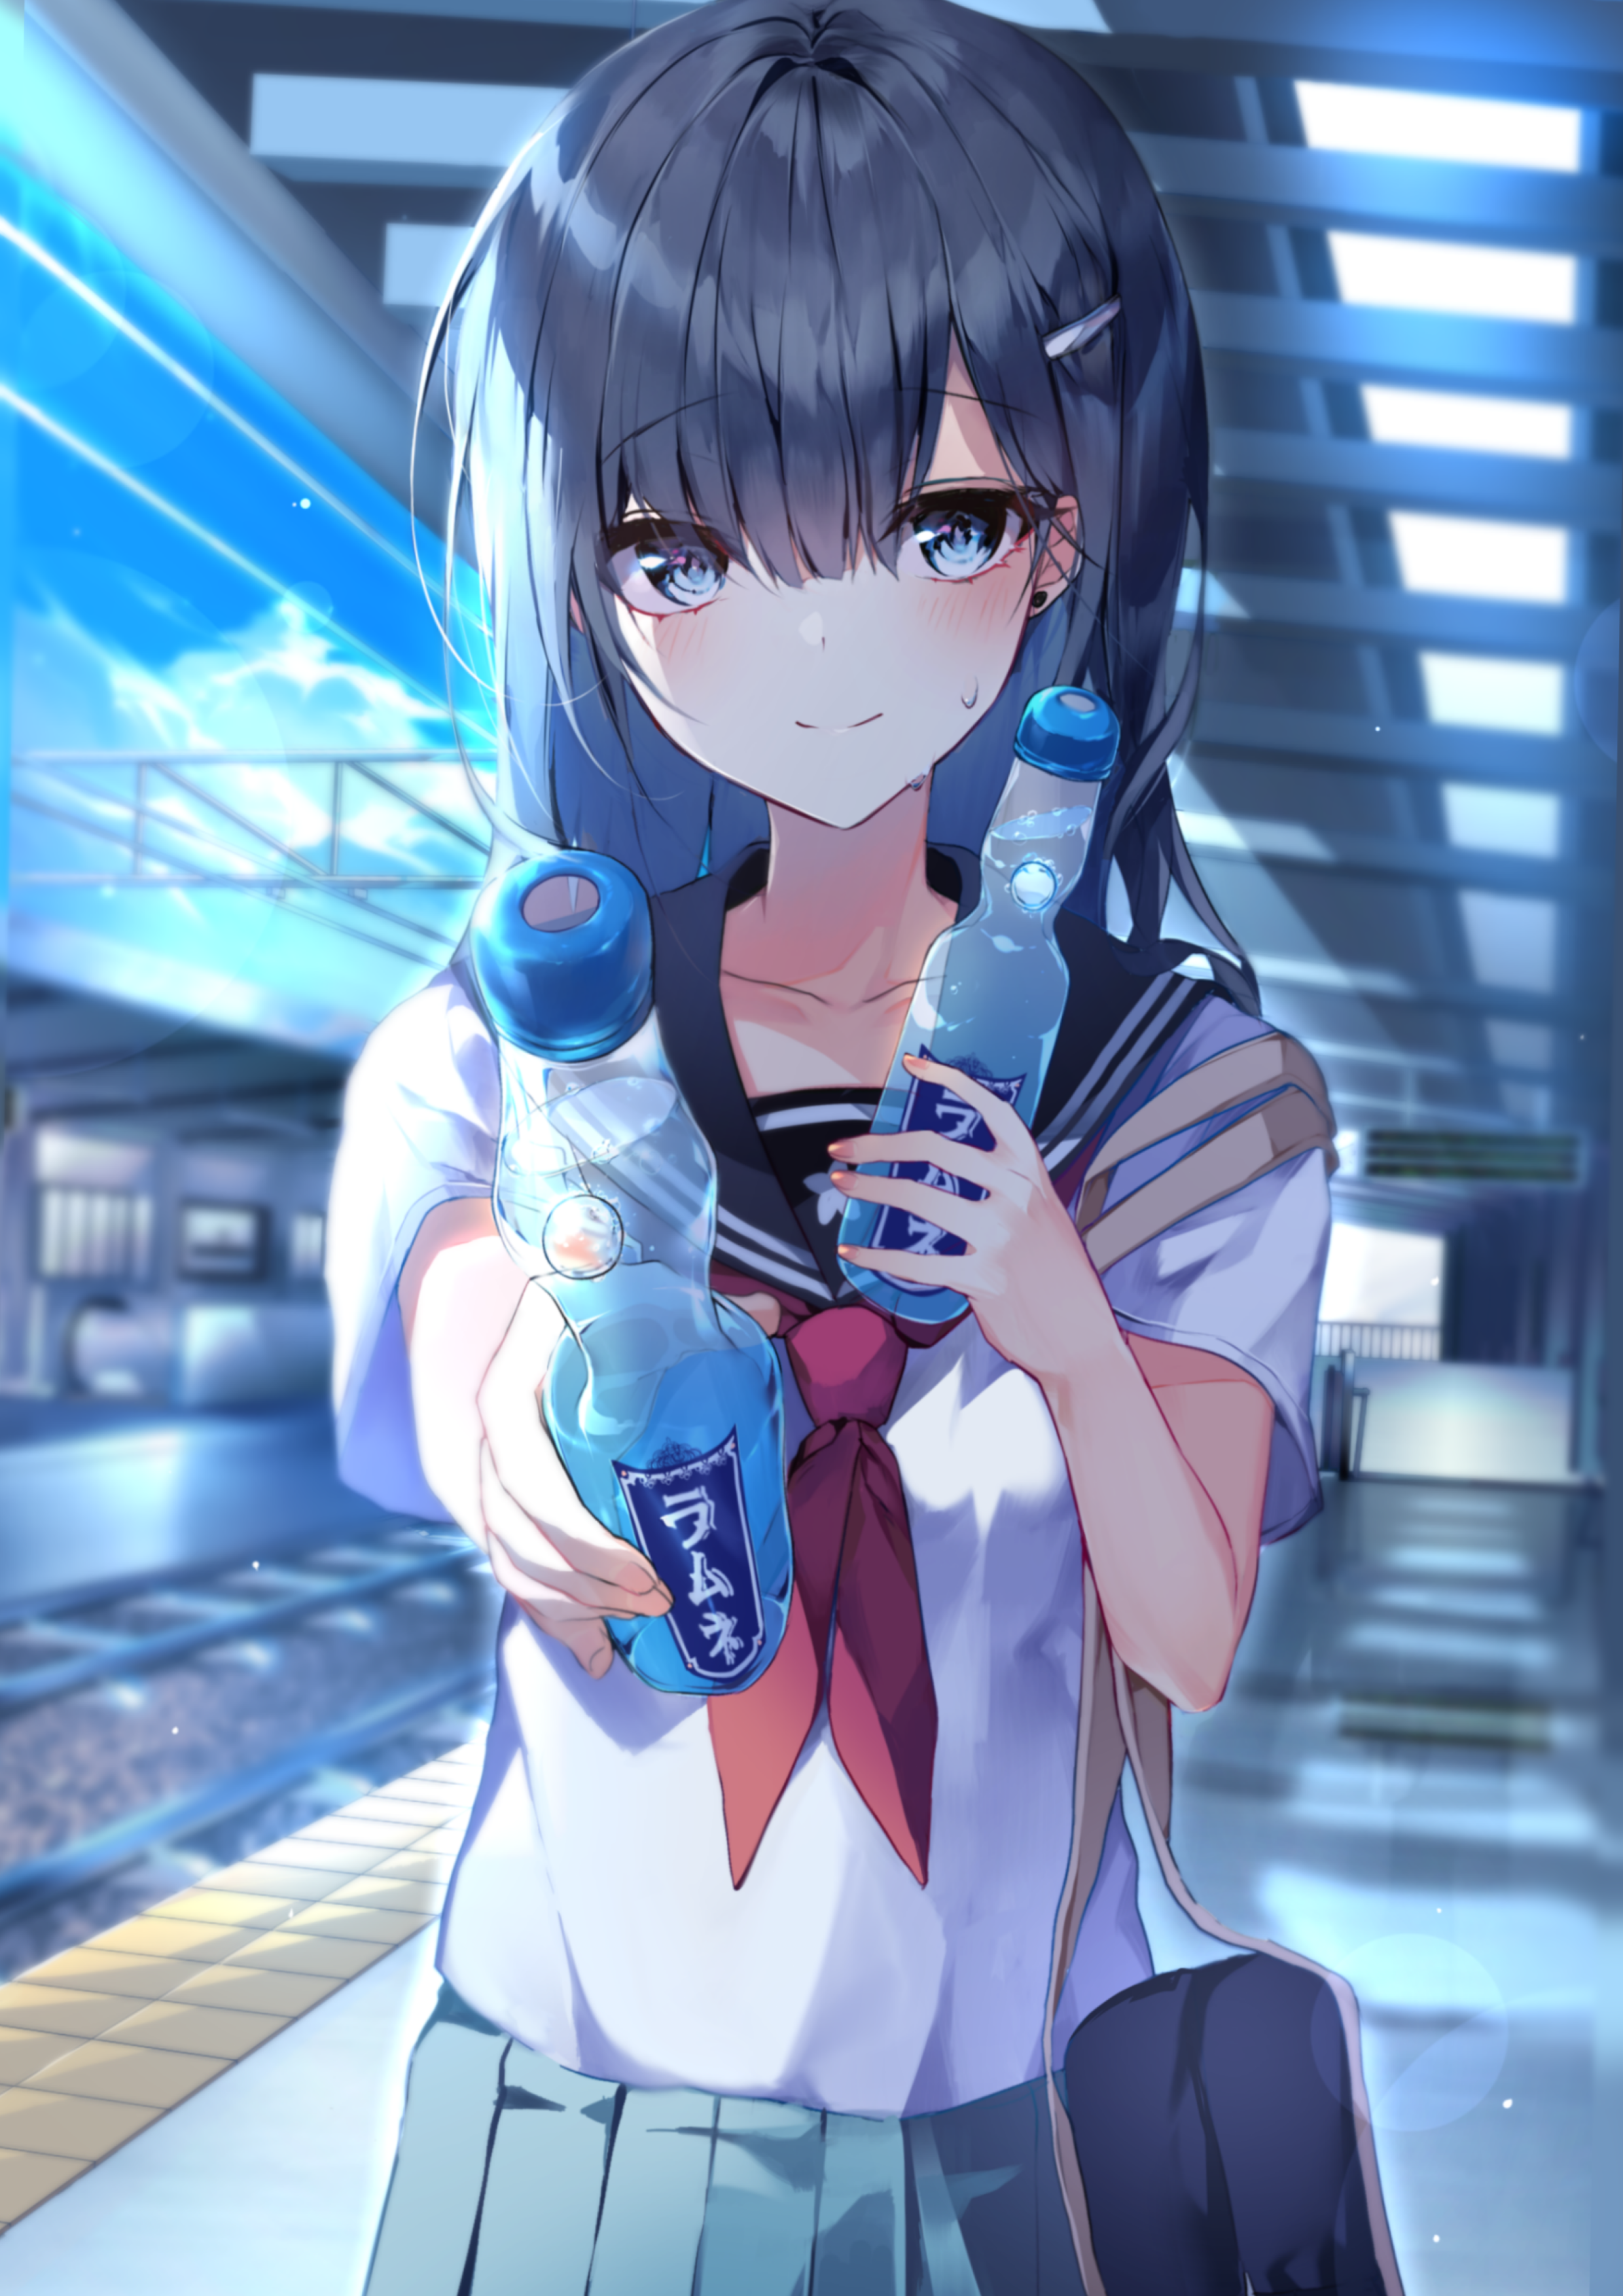 Anime 2480x3508 anime anime girls digital art artwork 2D portrait display train station water bottle school uniform black hair blue eyes POV Bara